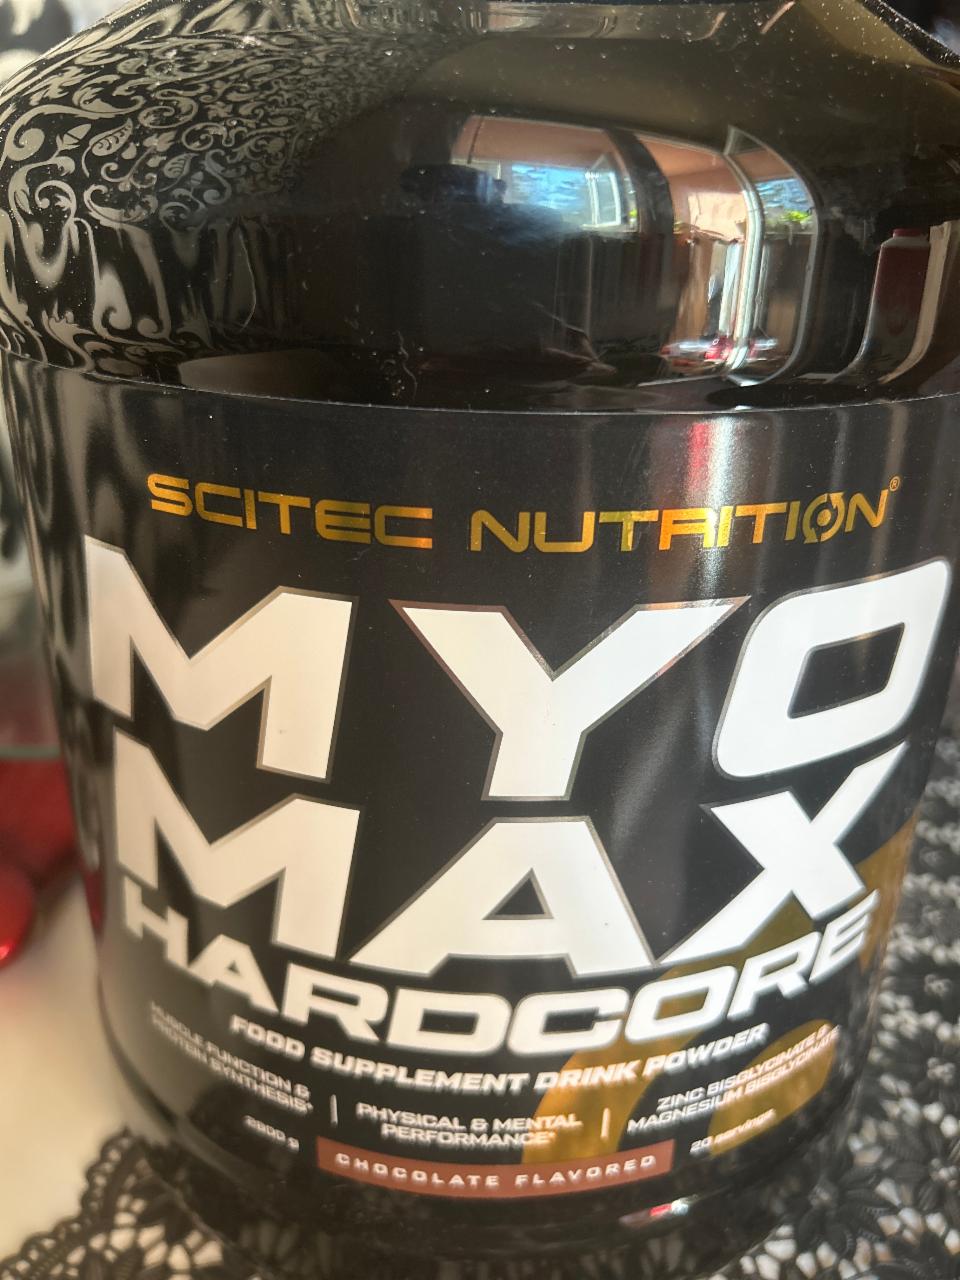 Fotografie - Myo Max Hardcore Chocolate flavored Scitec Nutrition